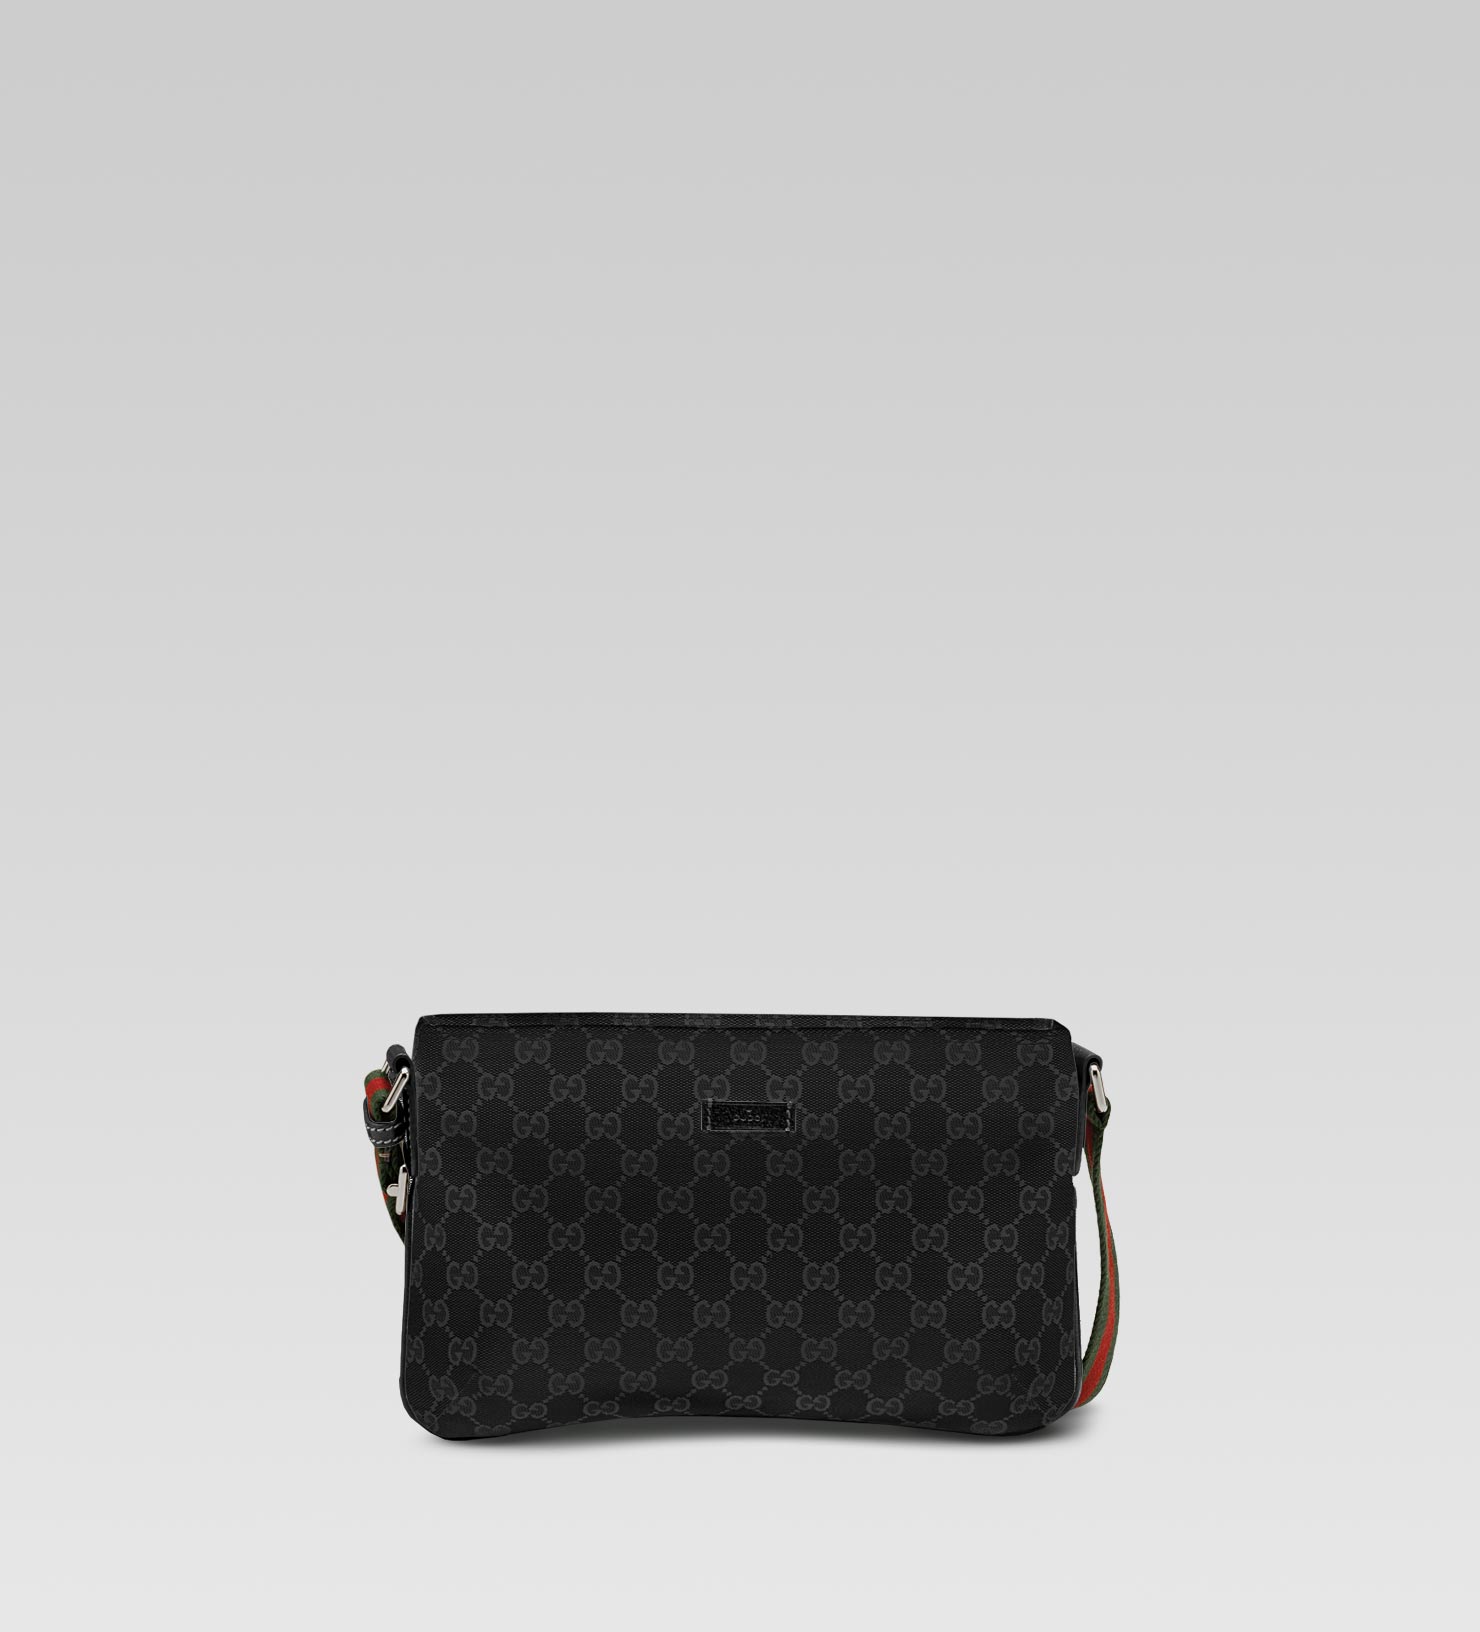 Gucci Small Black Messenger Bag | NAR Media Kit